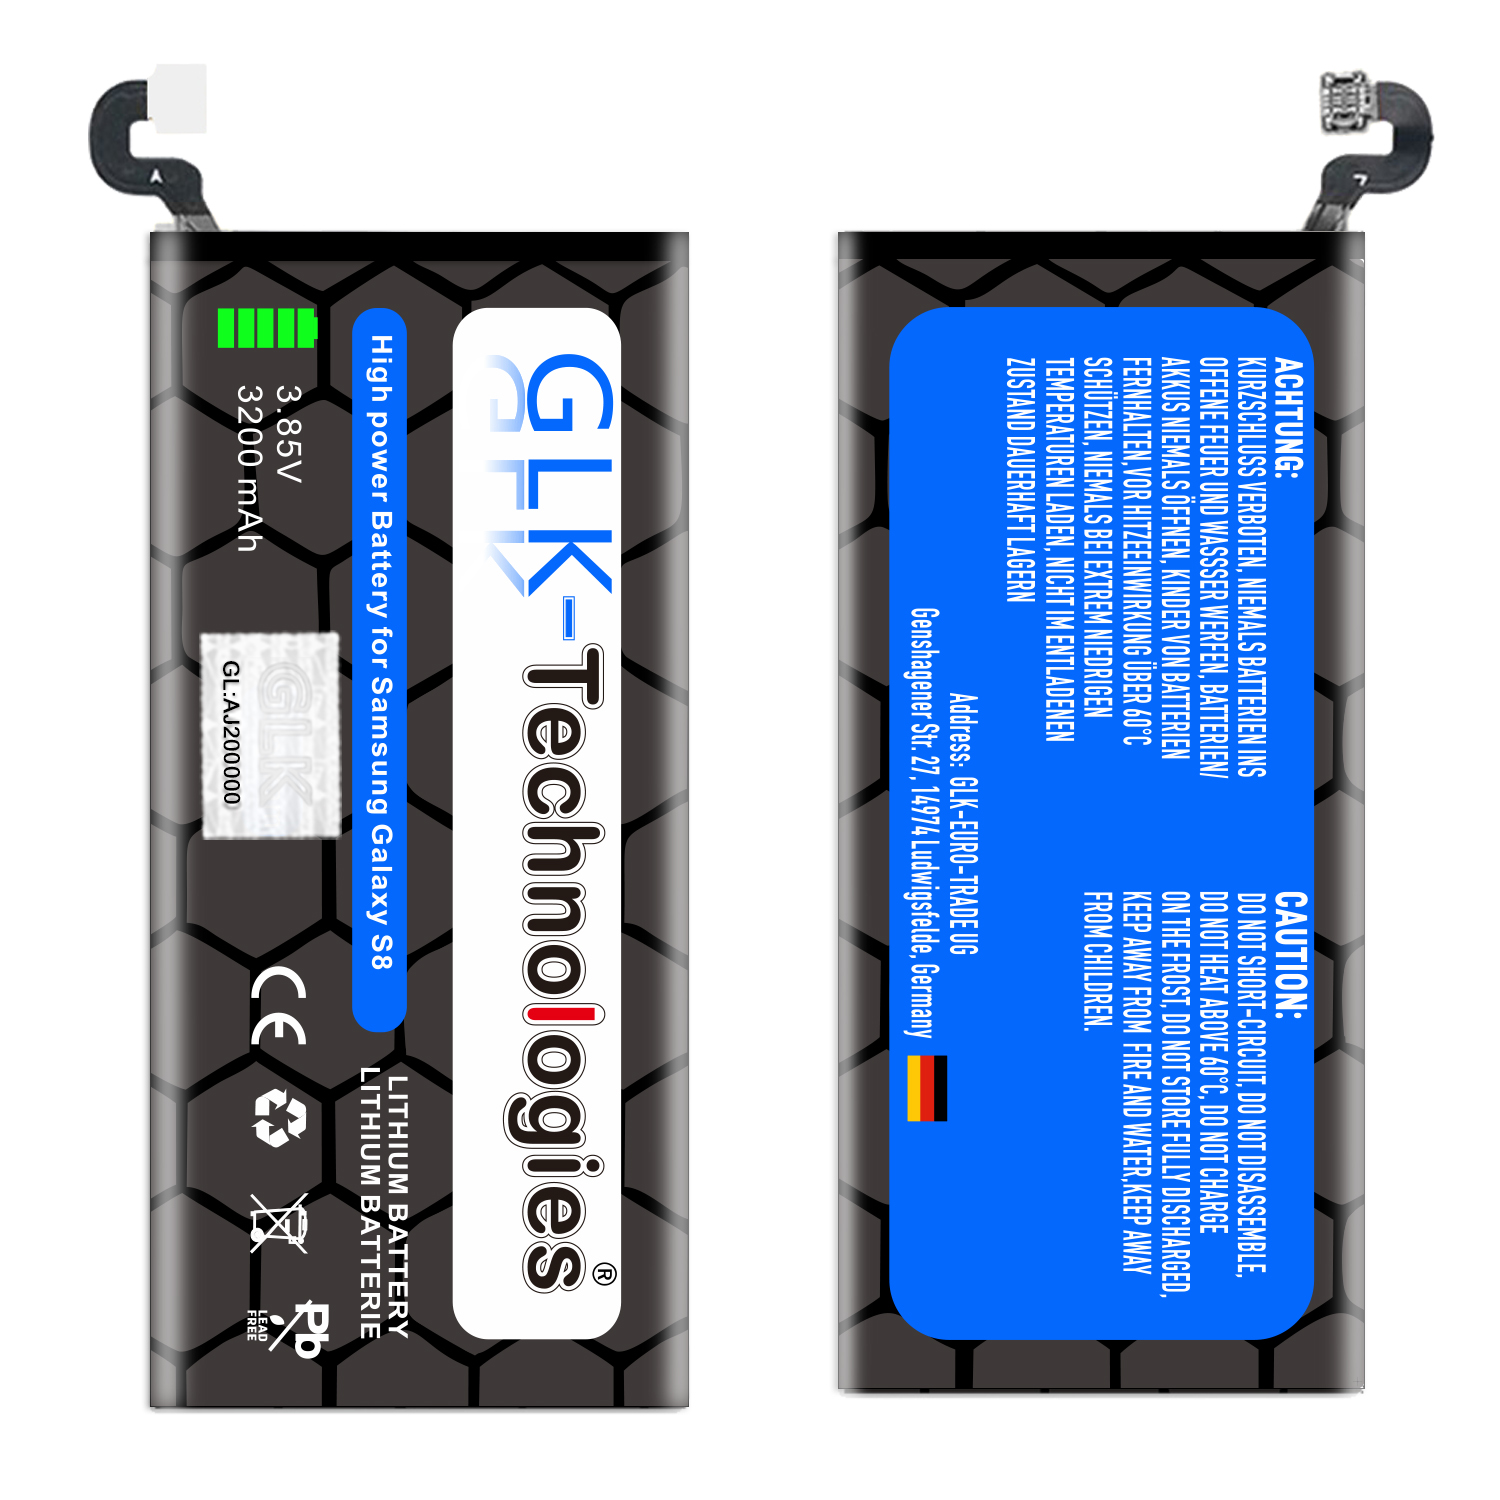 GLK-TECHNOLOGIES High Akku, S8 Li-Ion, GLK-S8 Power Volt, 3200 Samsung mAh Smartphone Galaxy Akku Ersatz mAh 3200 kompatibel | SM-G950F 3.85 für EB-BG950BBE